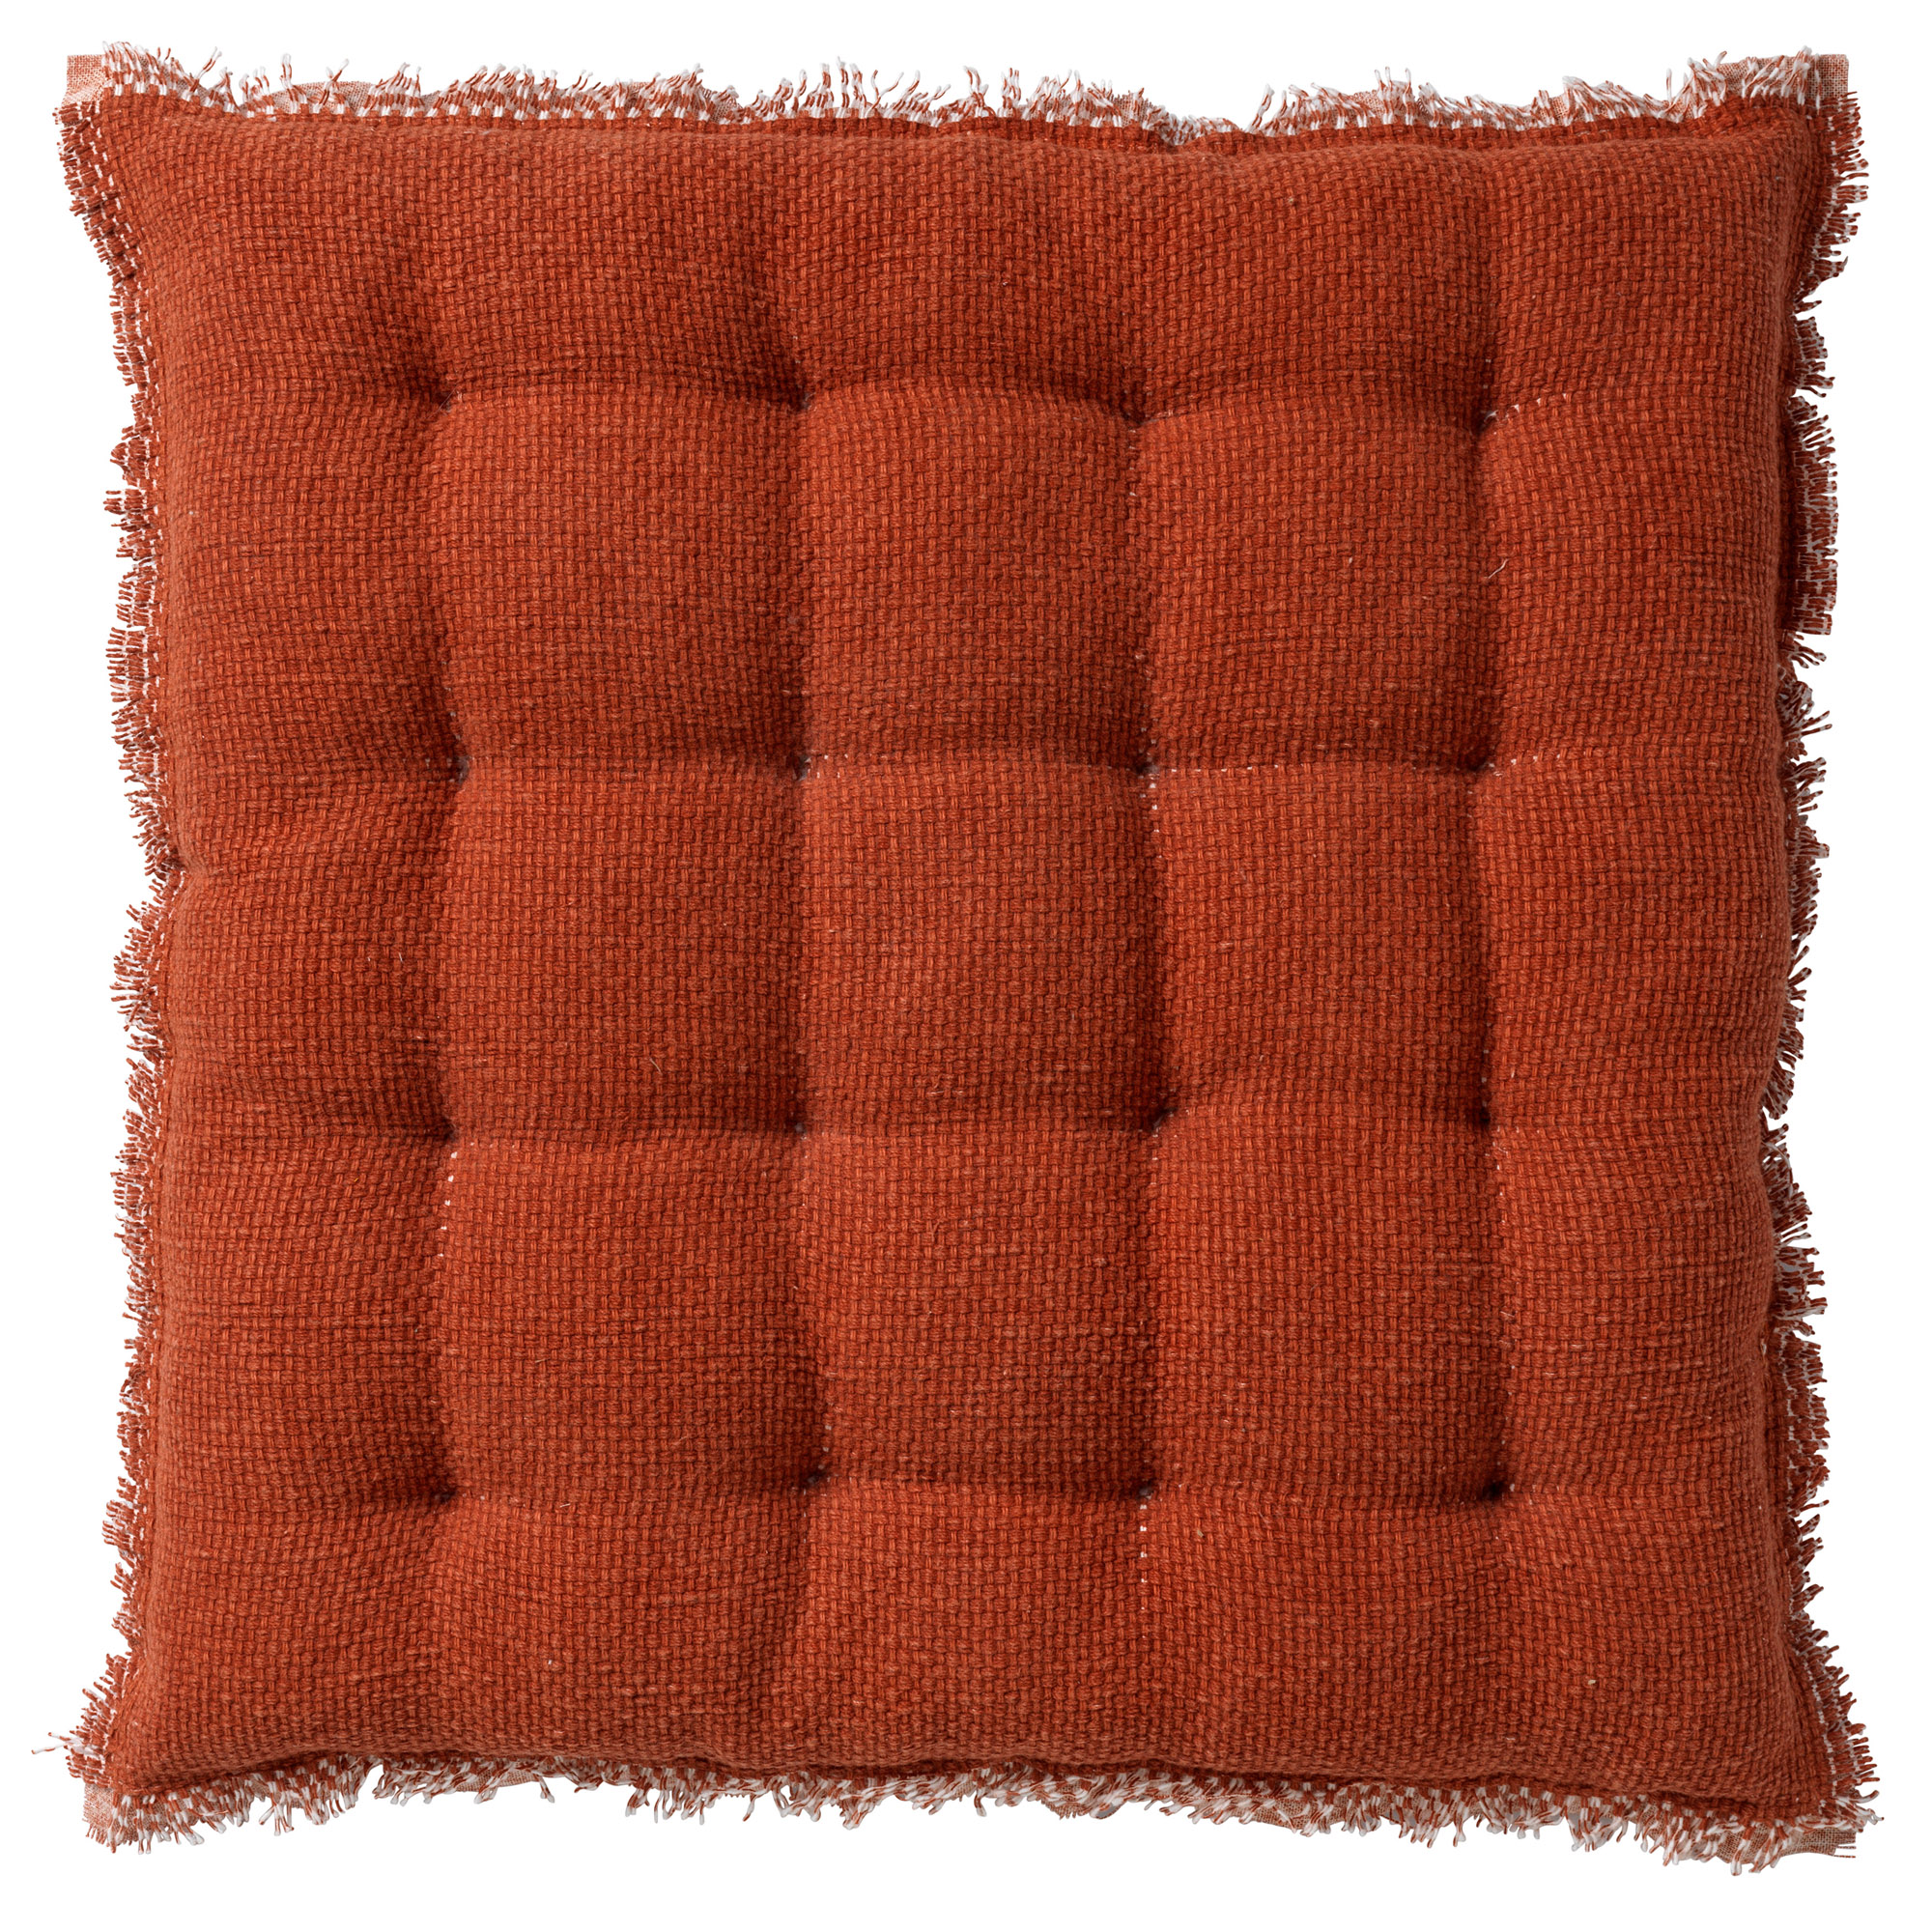 BURTO - Seat pad cushion washed coton Potters Clay 40x40 cm